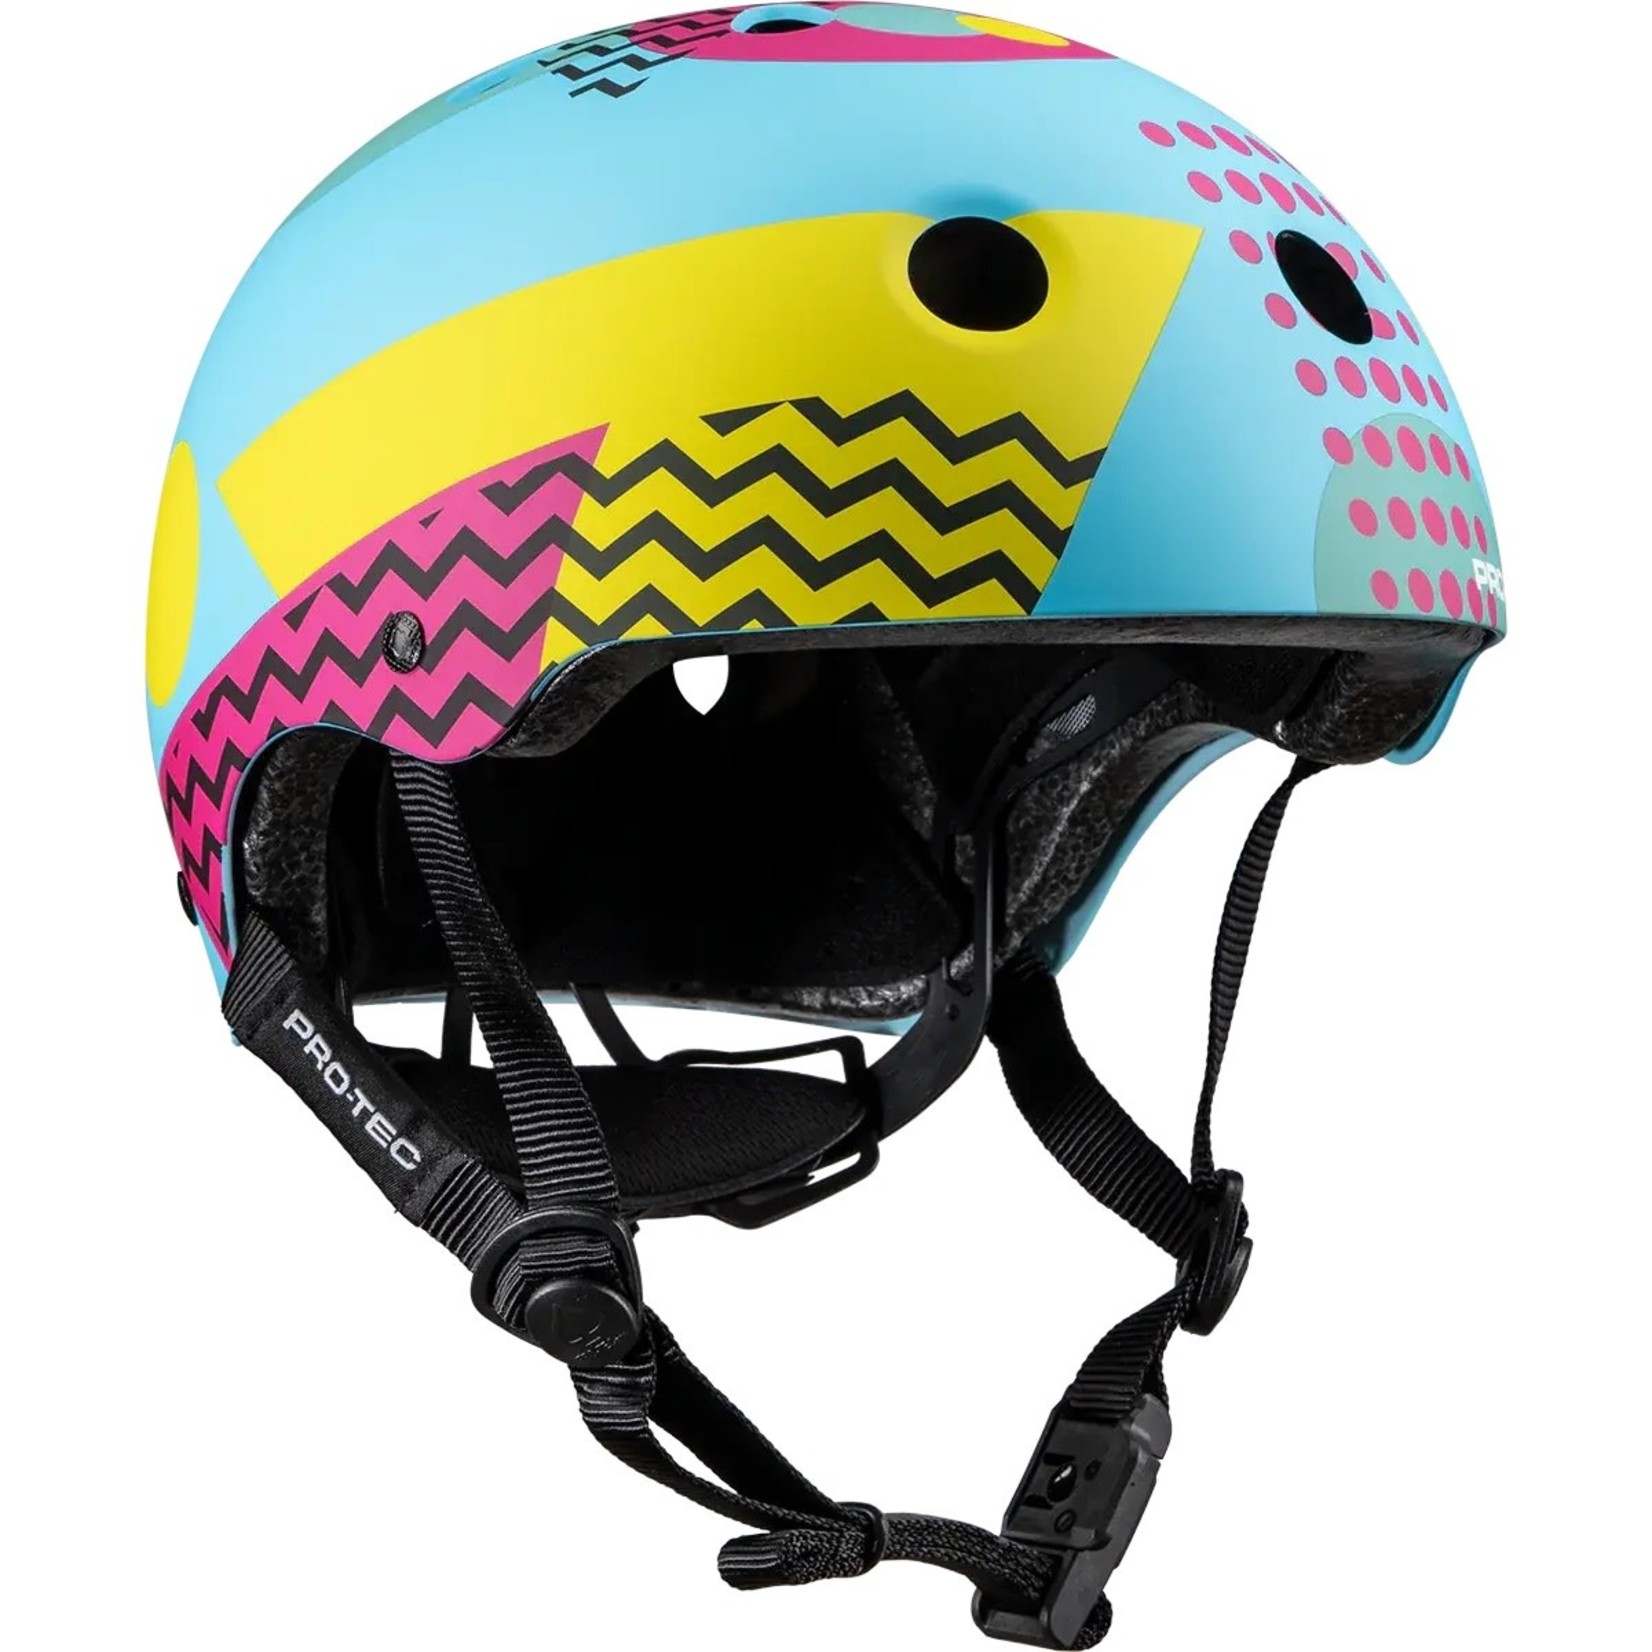 Pro-Tec Pro-Tec Junior Classic Fit Certified Helmet